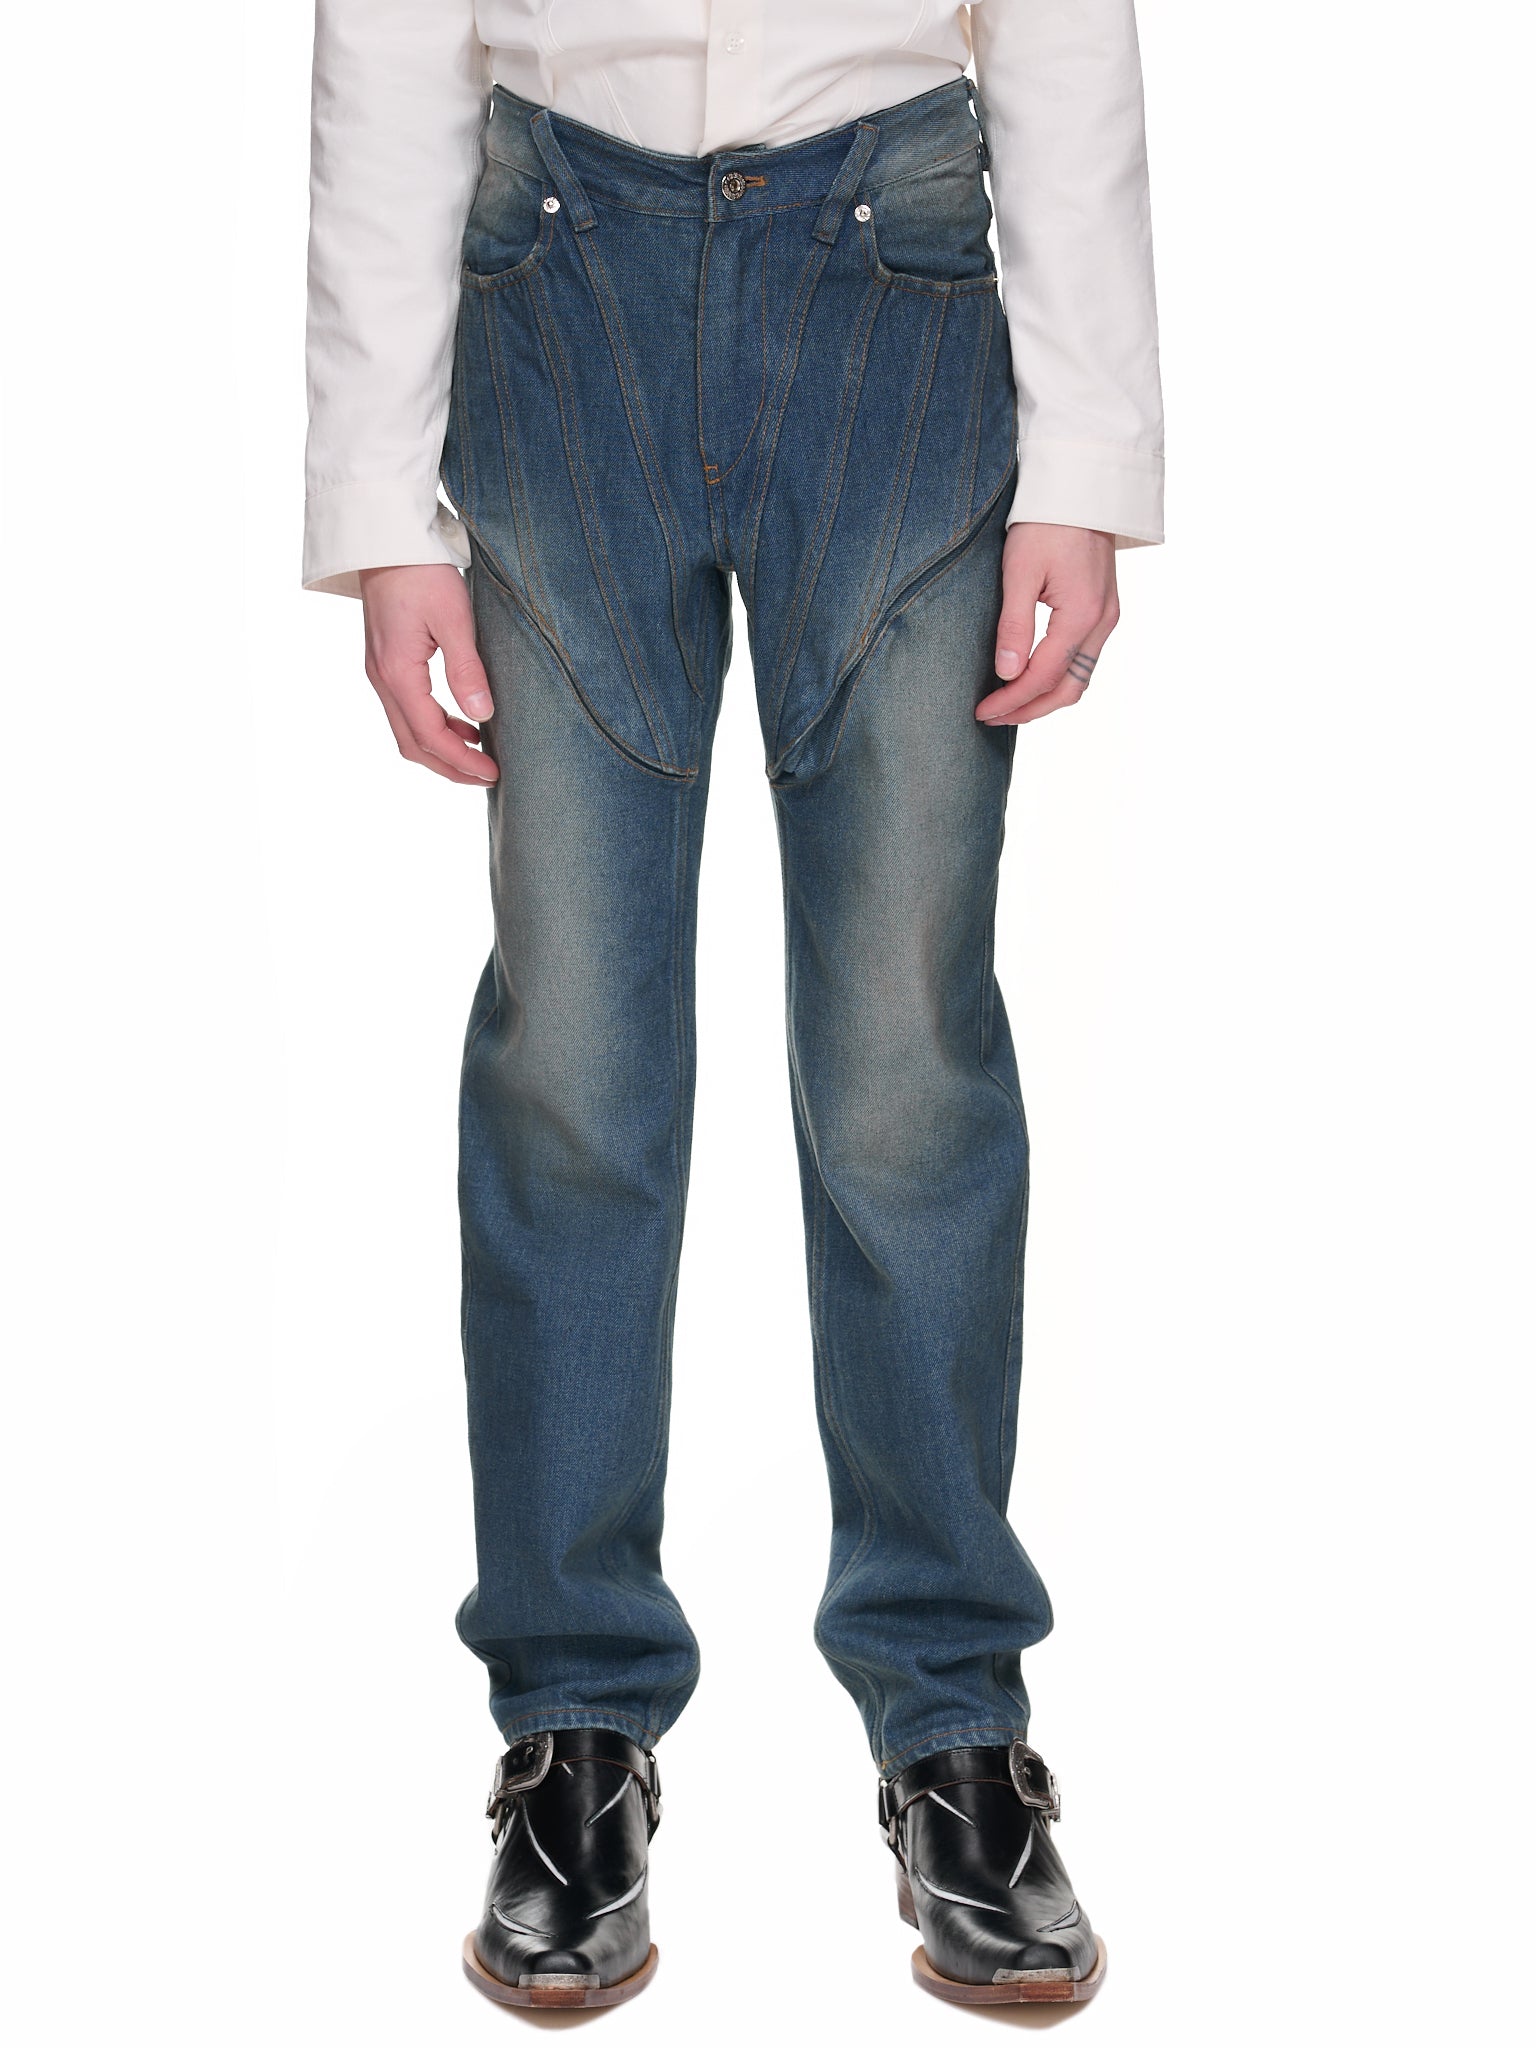 Seam Denim Pants (JTK-T02-WASHED-BLUE)